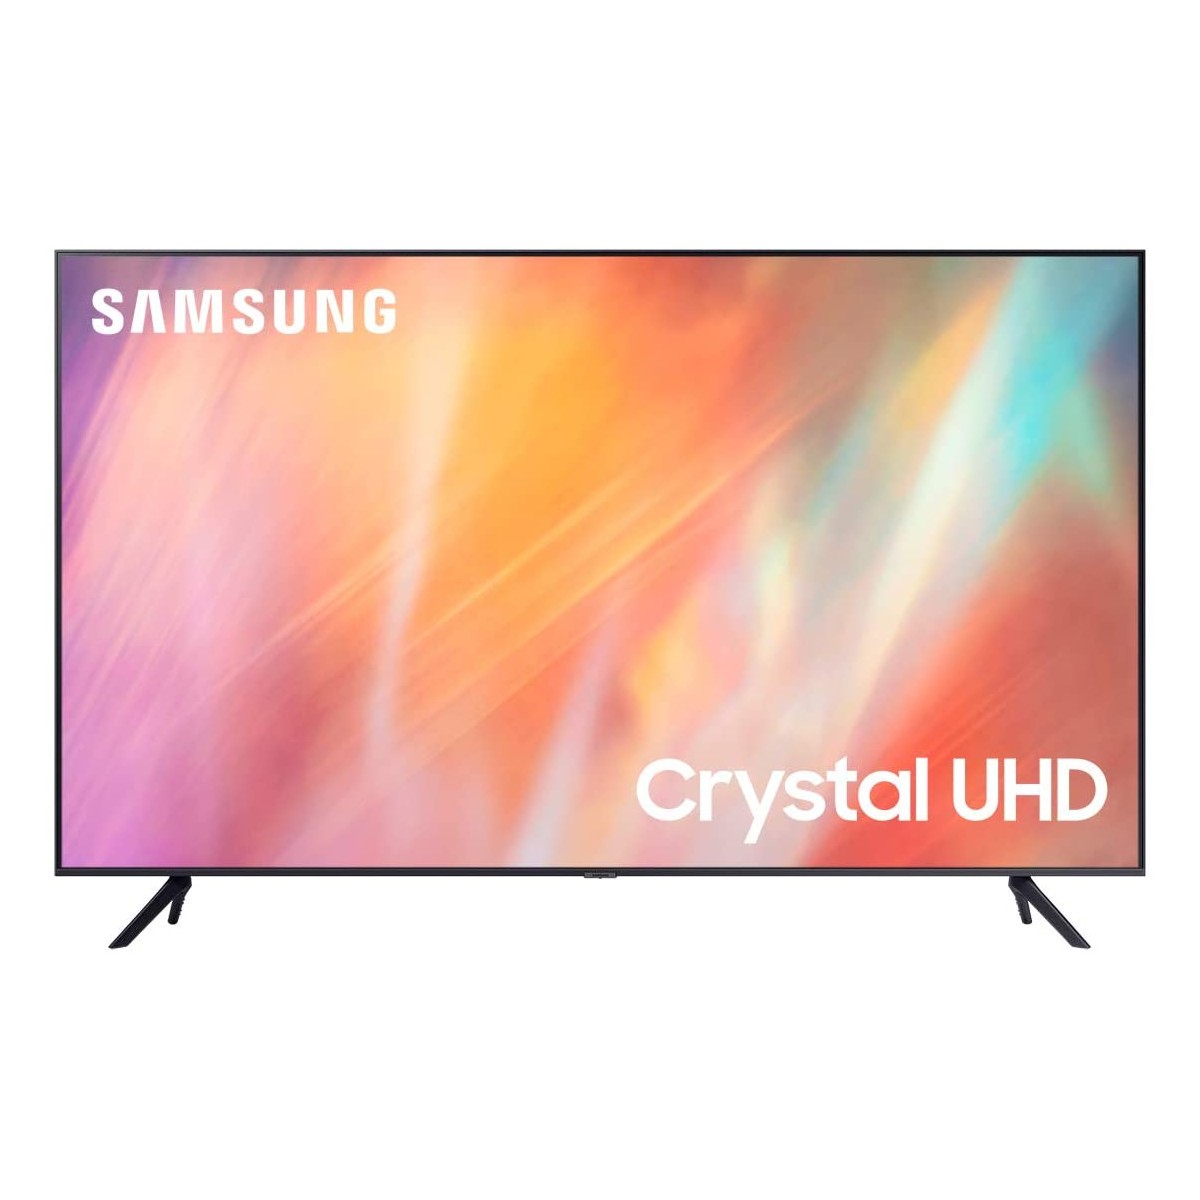 TV Smart Samsung da 43, Crystal UHD 4K, idea regalo